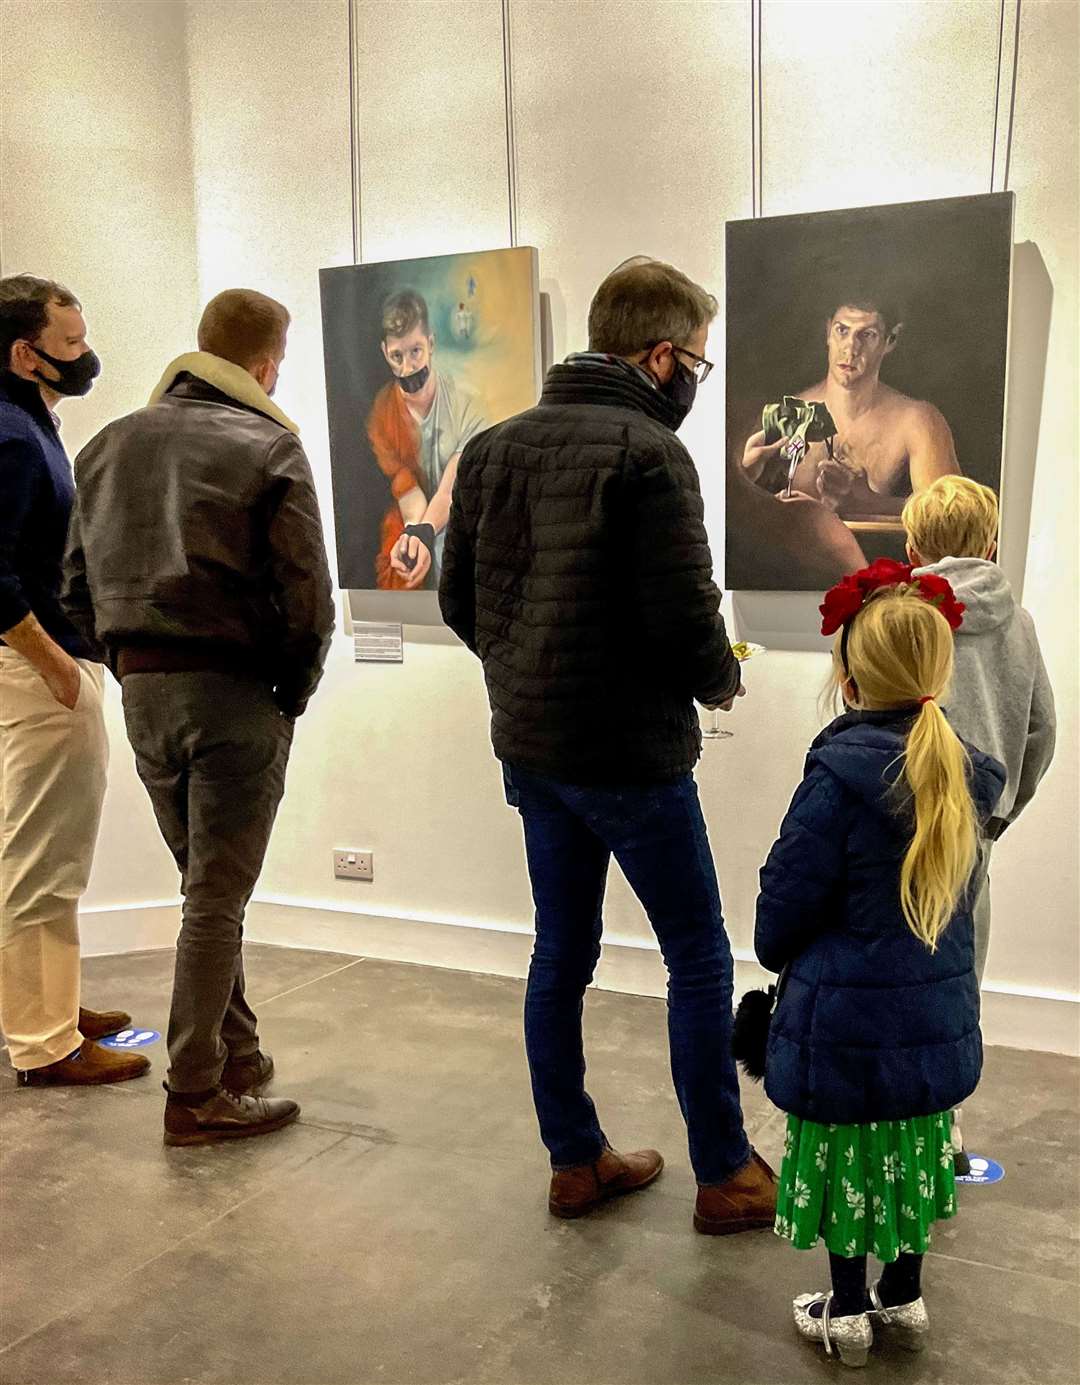 Visitors appreciating the art on display at Moray Art Centre.